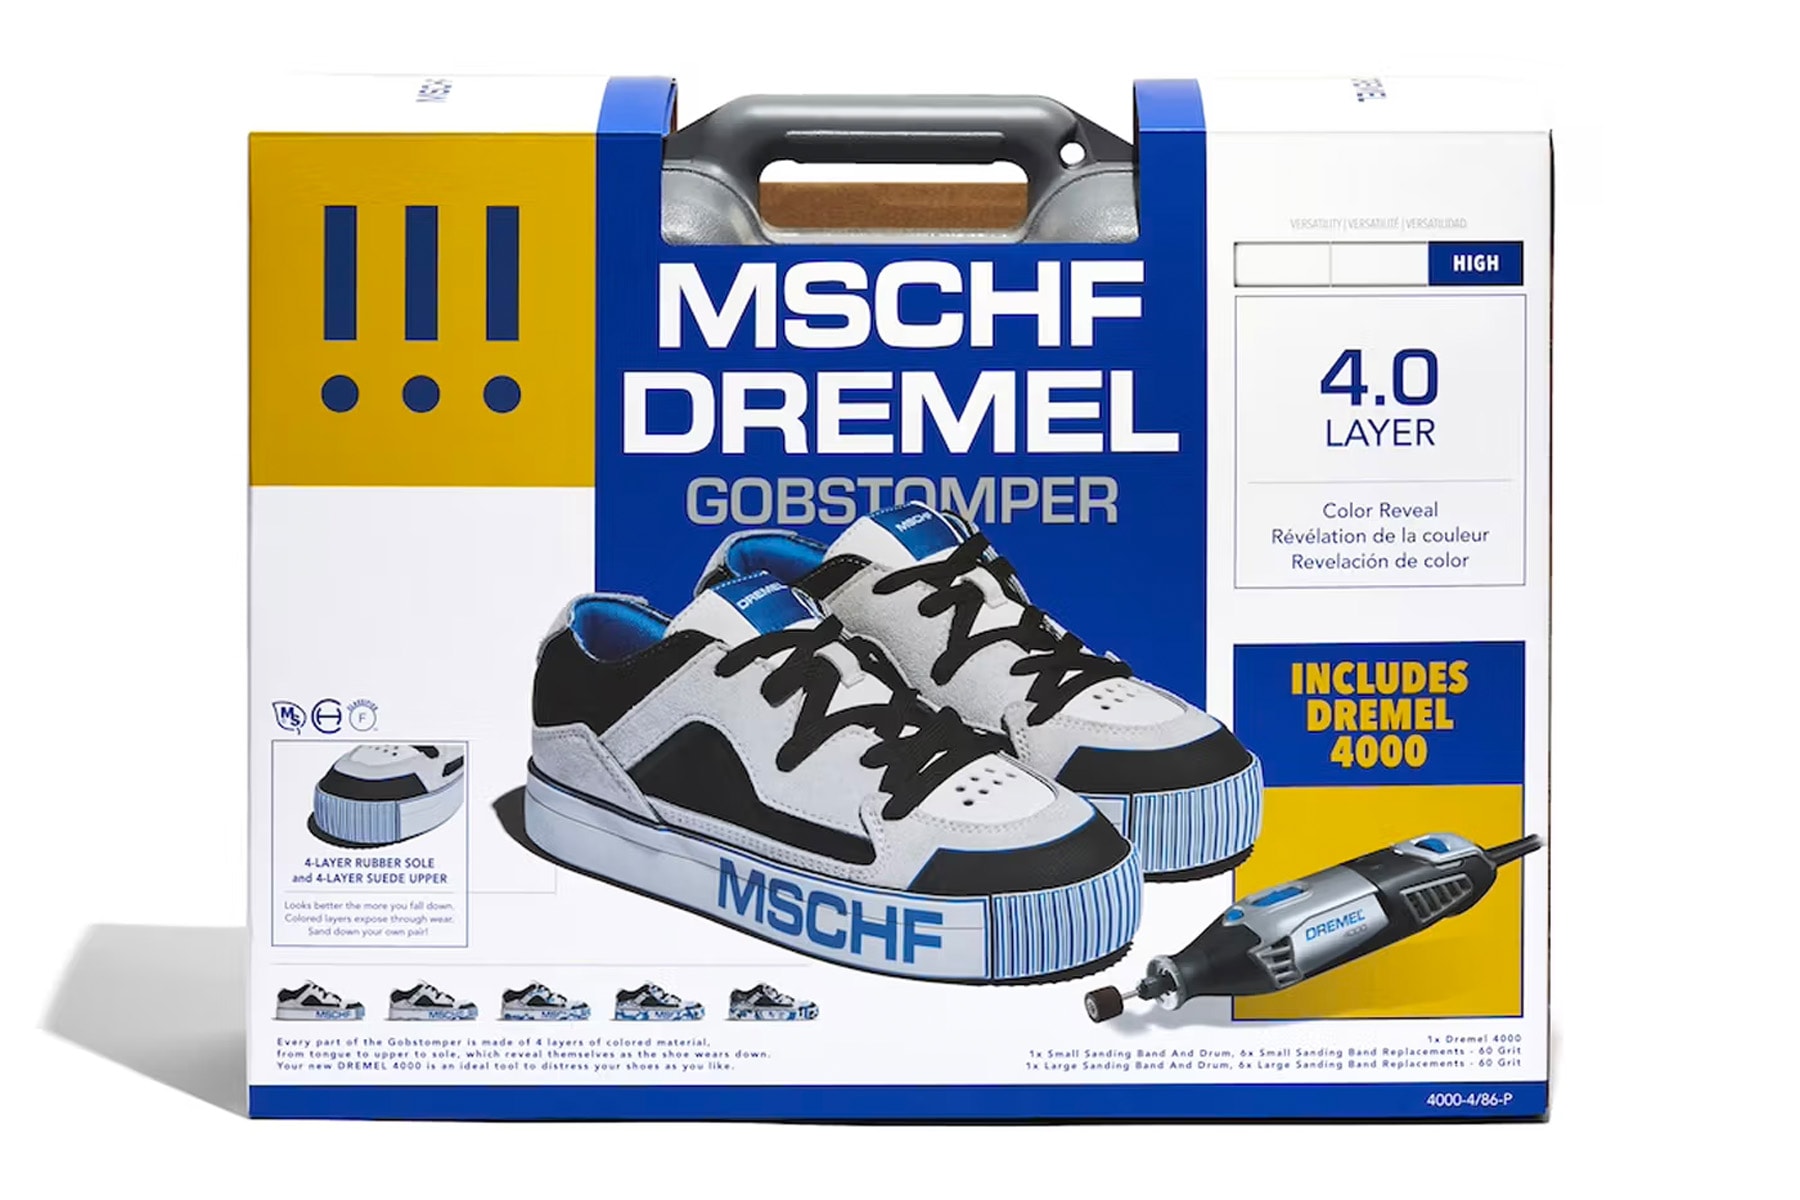 Dremel x MSCHF Gobstomper 全新聯名鞋款正式登場